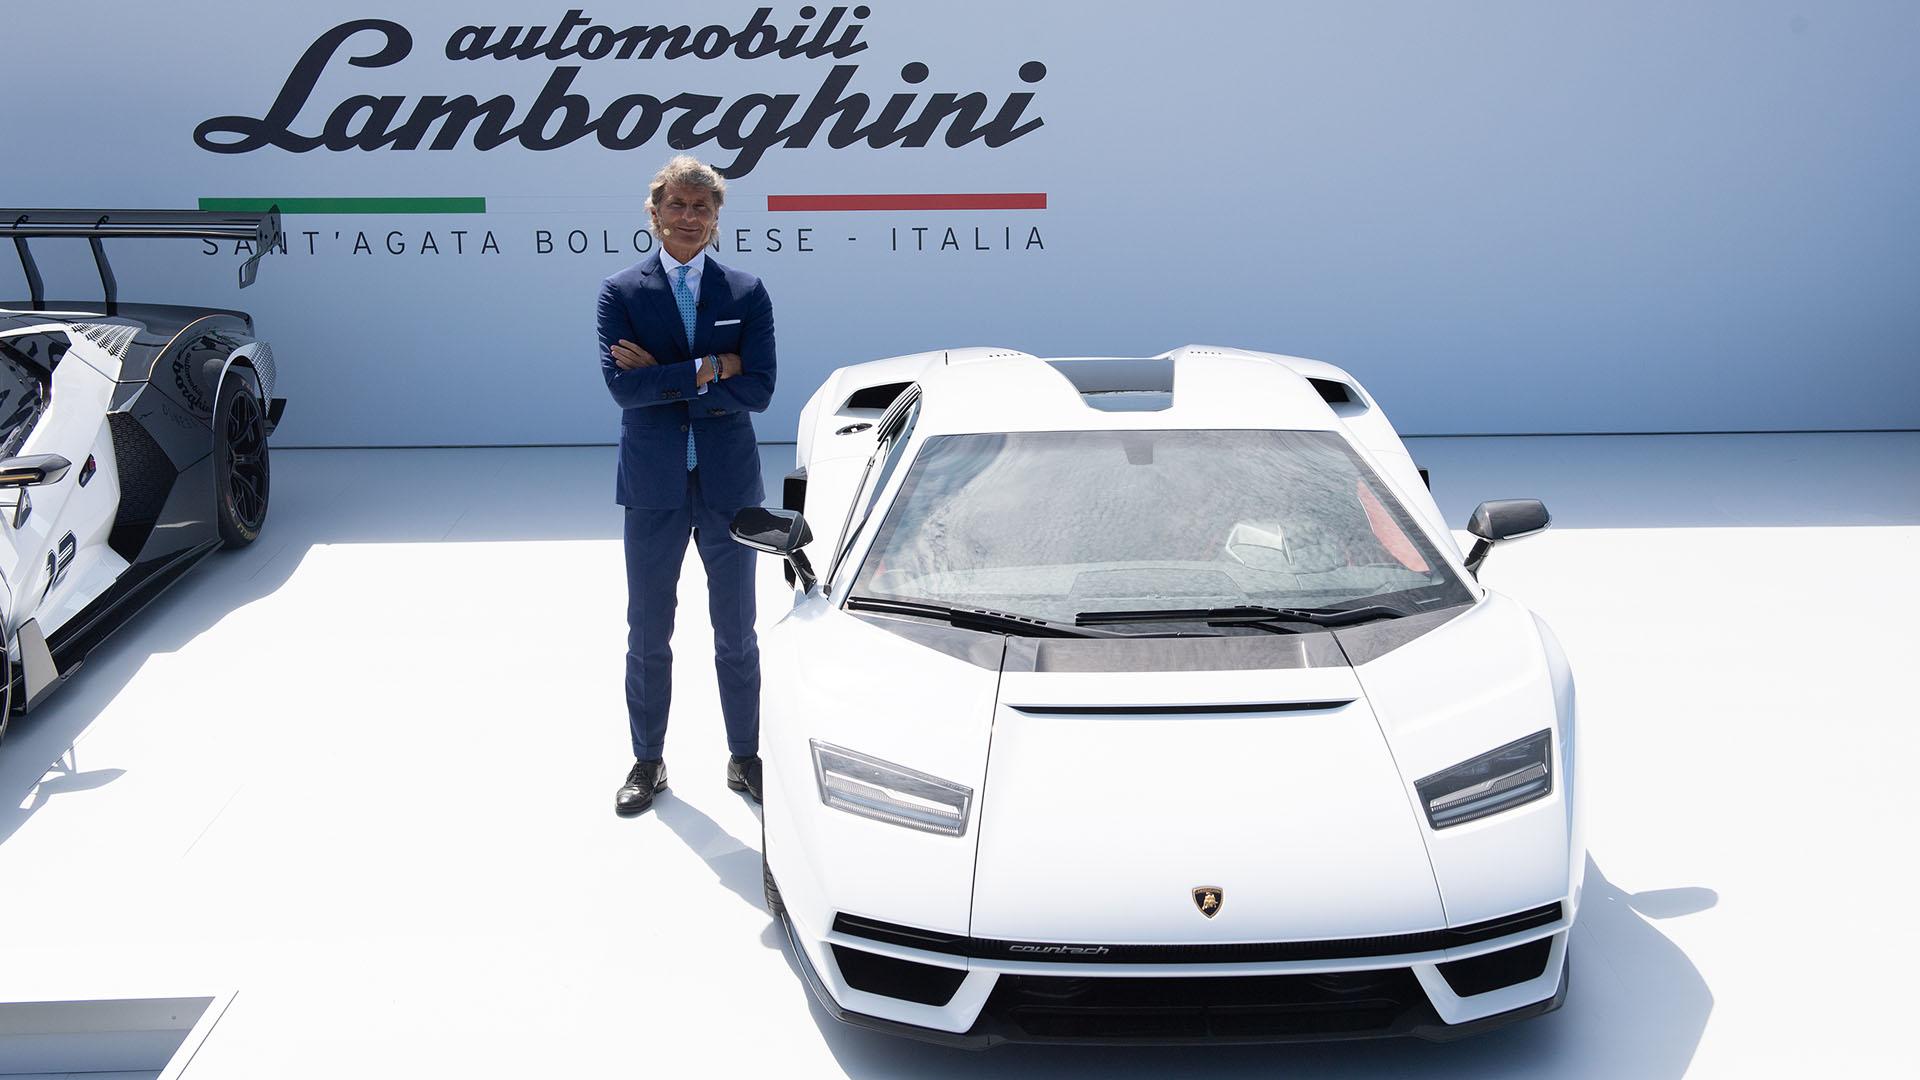 Presenter standing next to Lamborghini Countach LPI 800-4